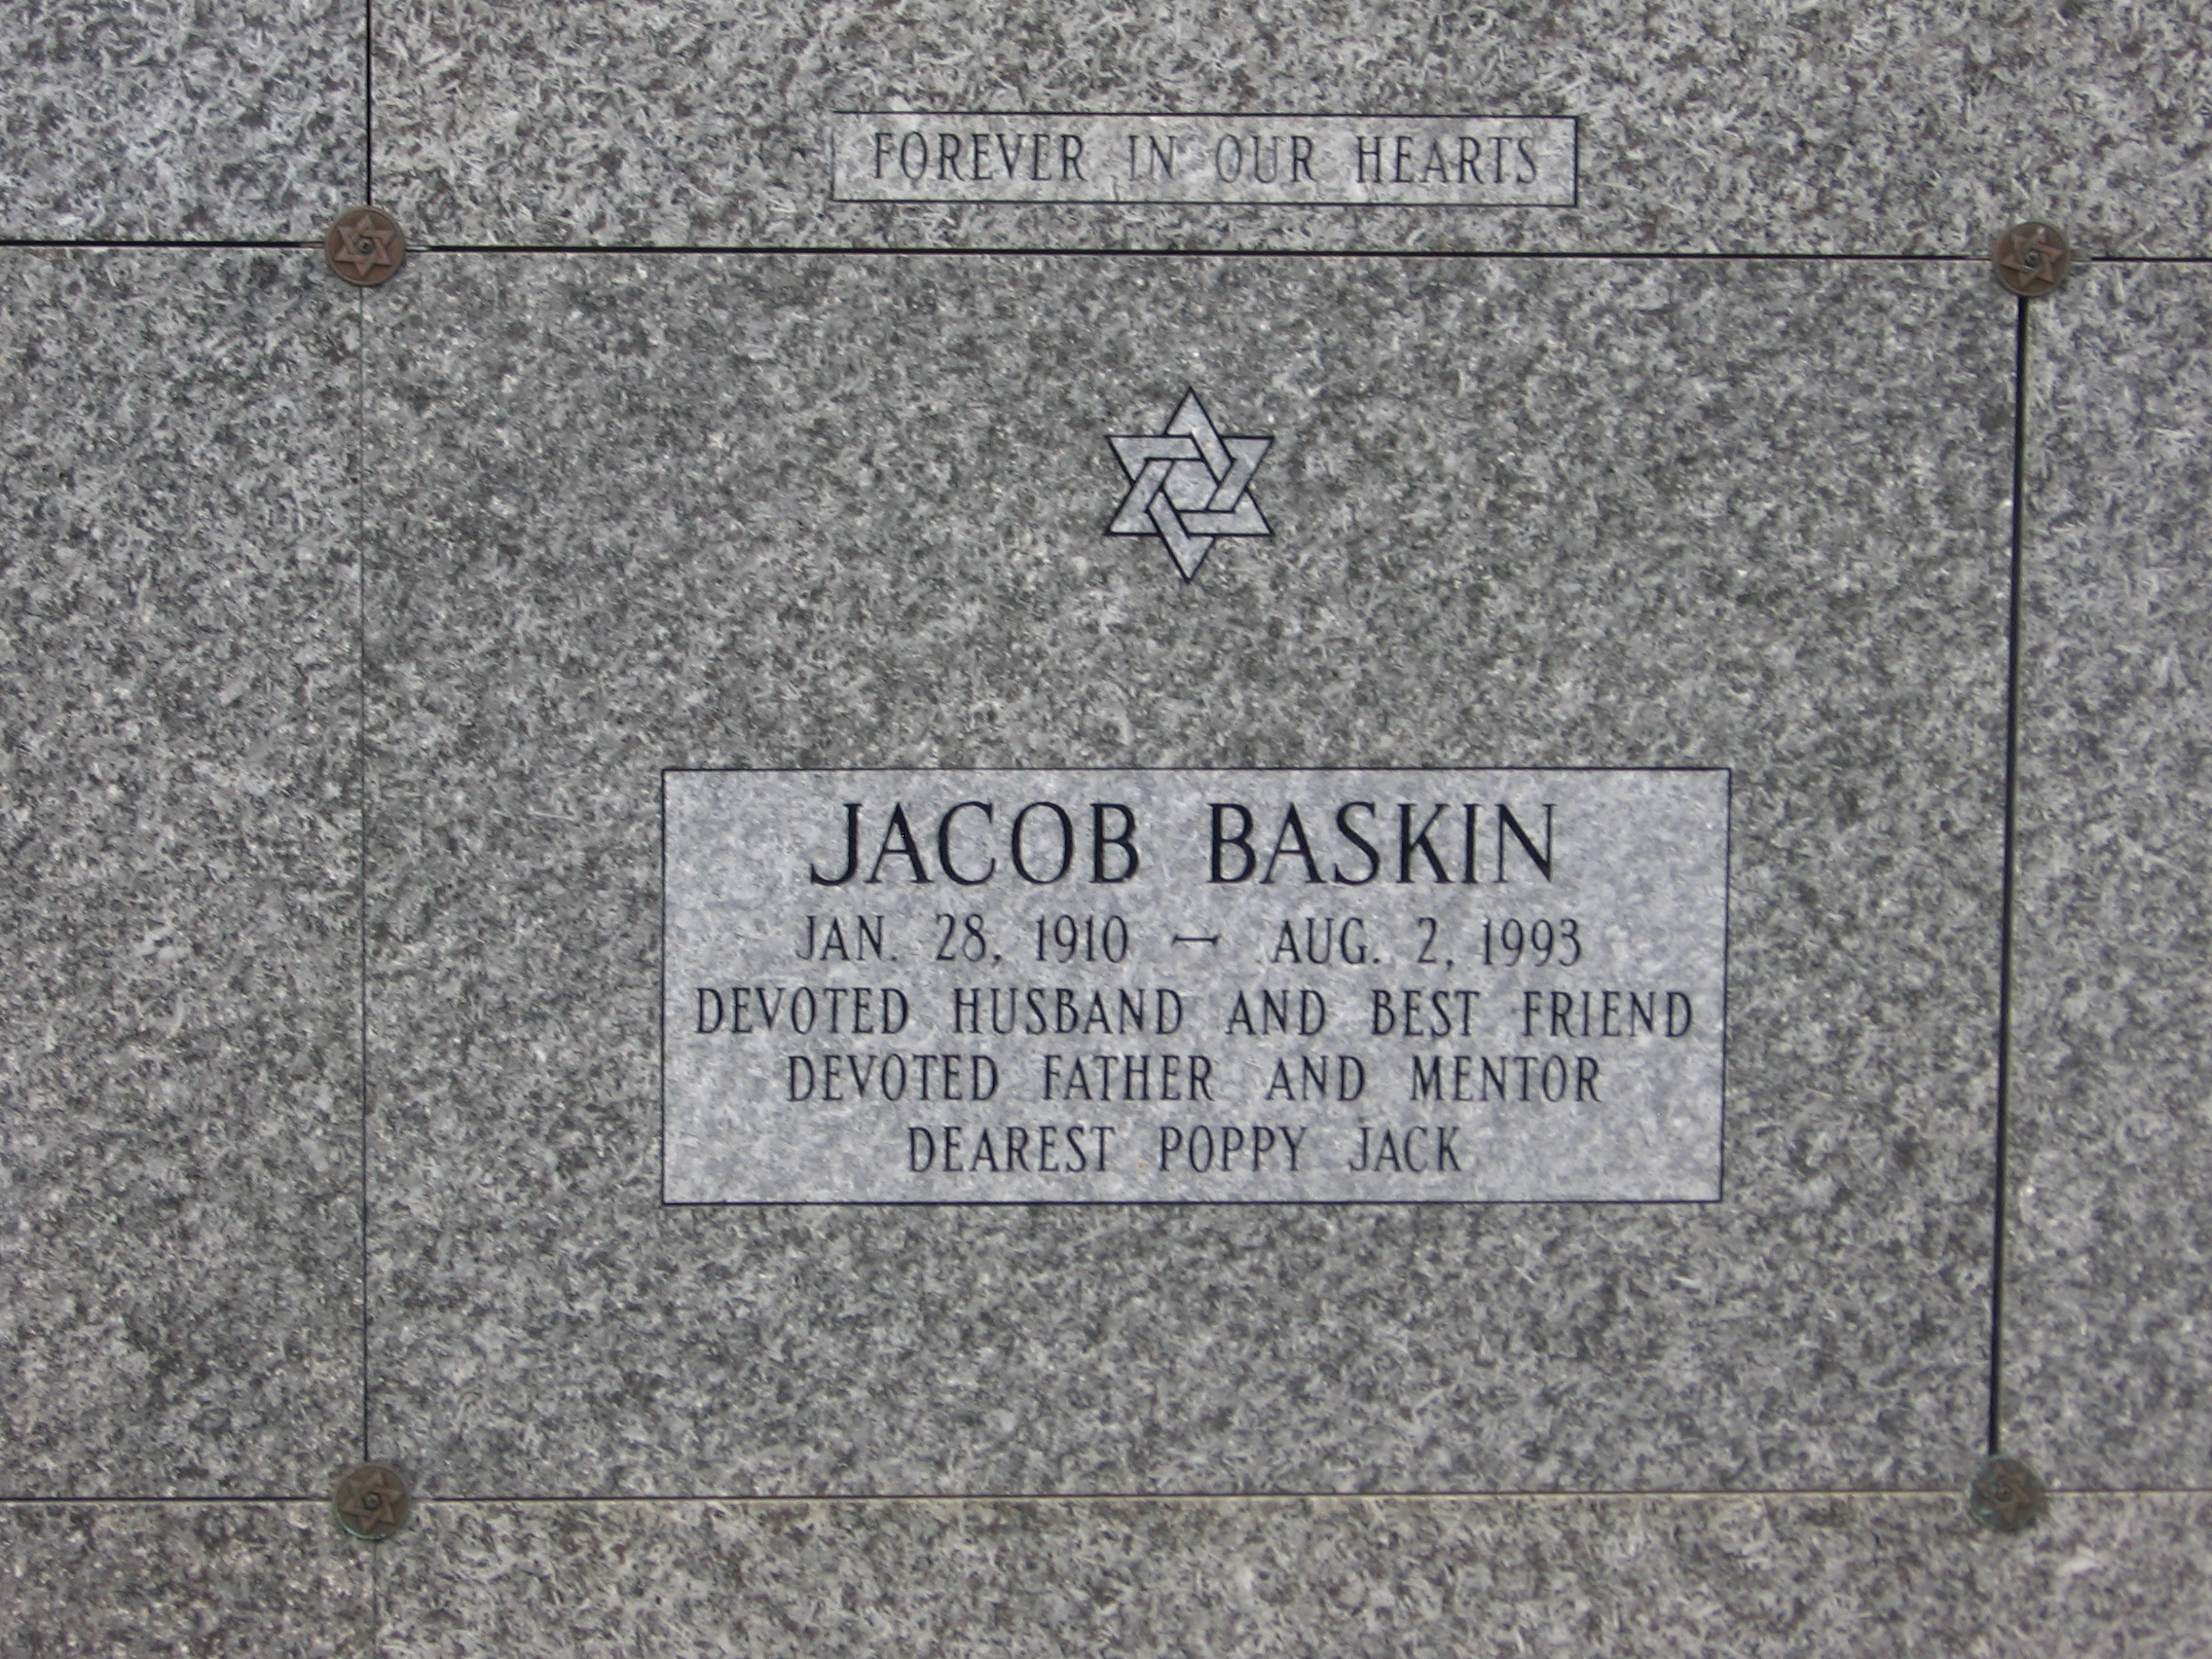 Jacob "Poppy Jack" Baskin